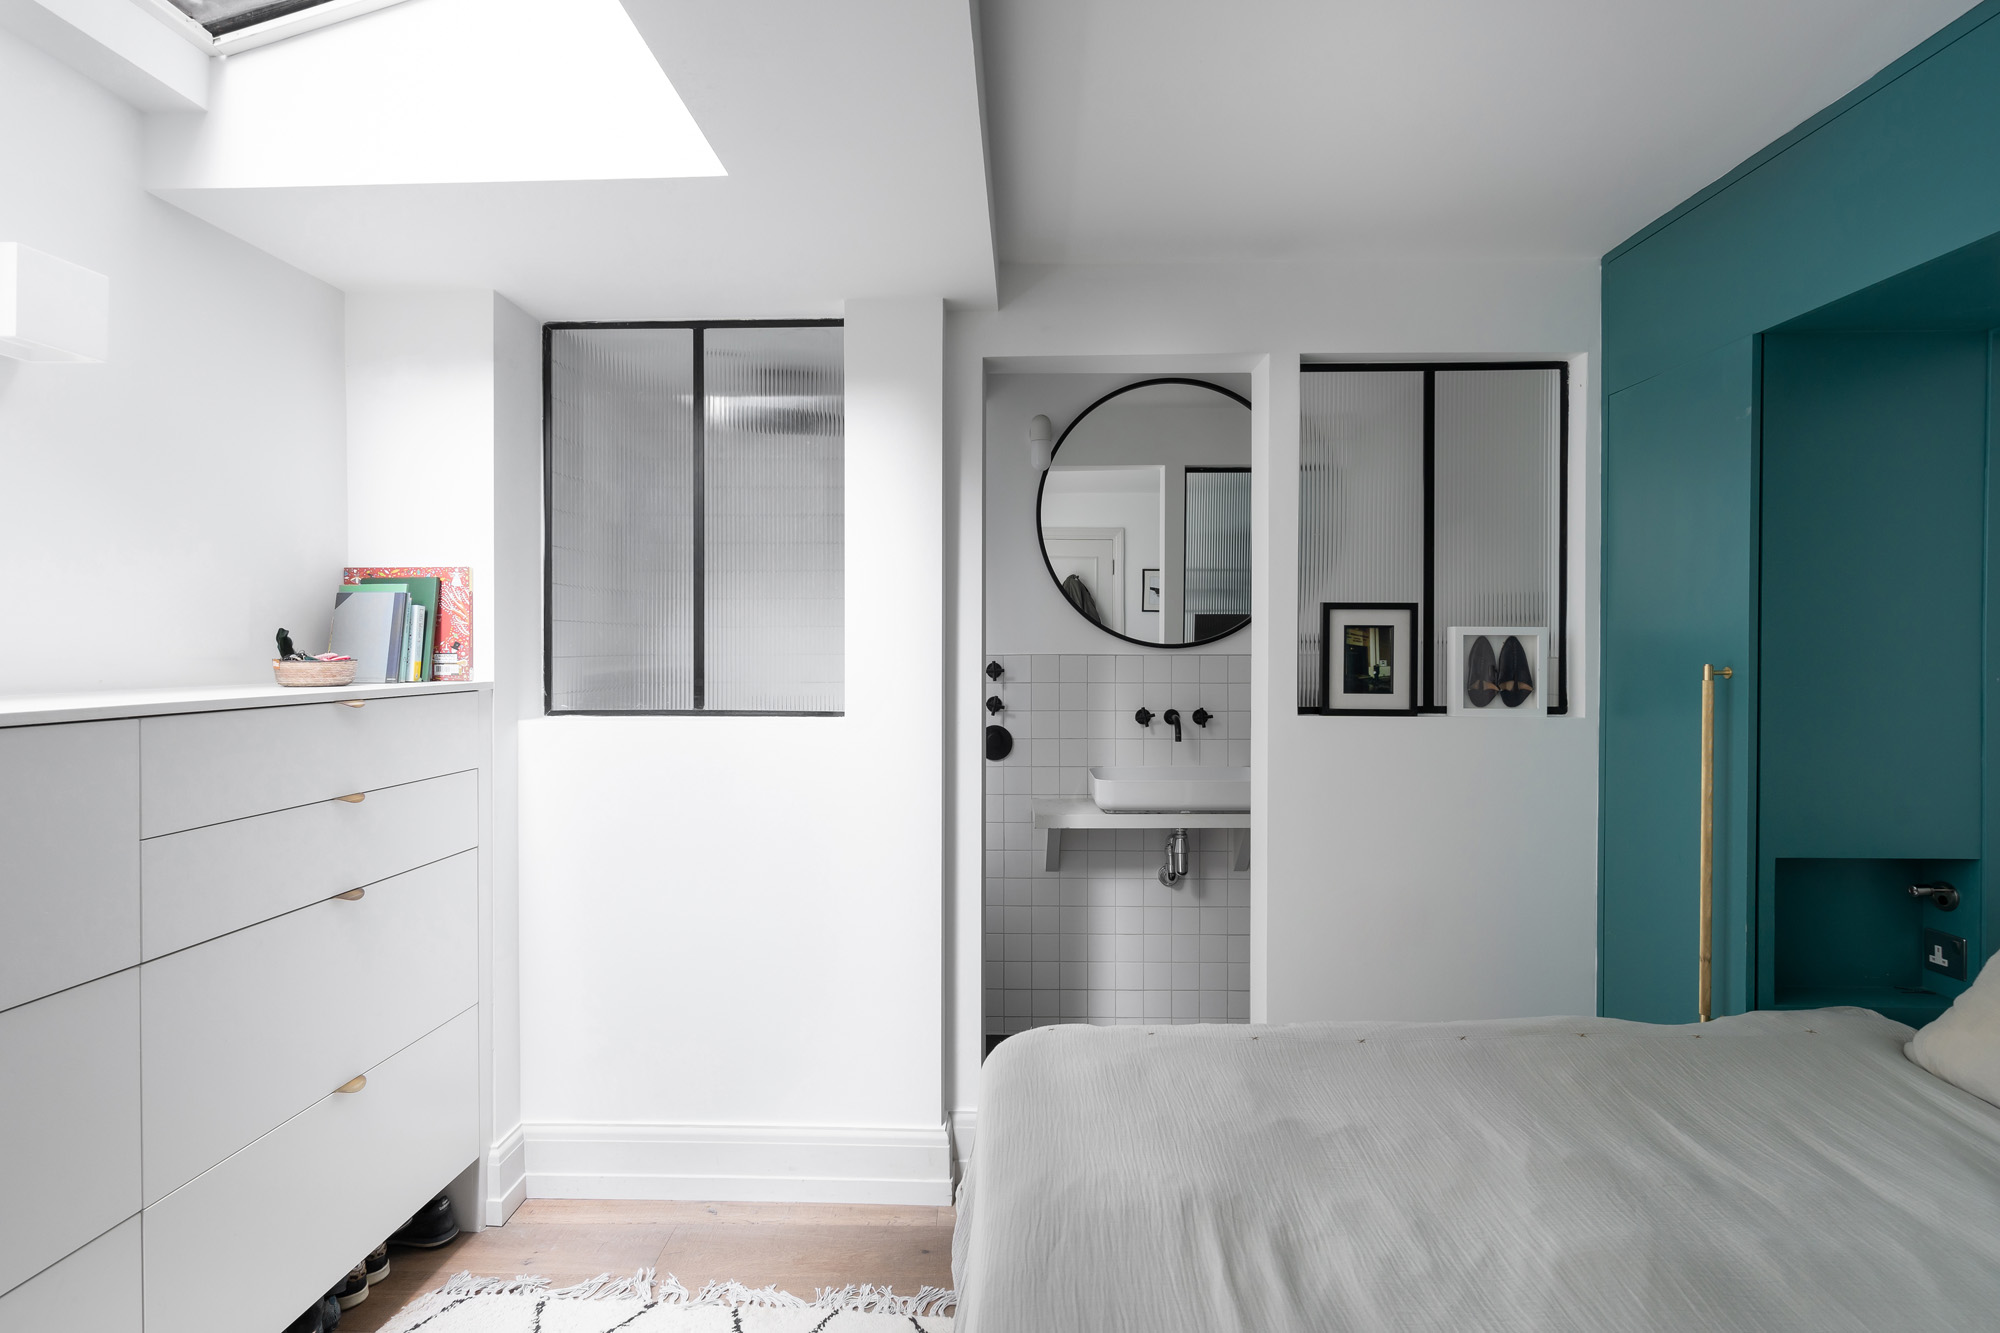 For Sale: St Marks Road North Kensington W10 minimalist master bedroom